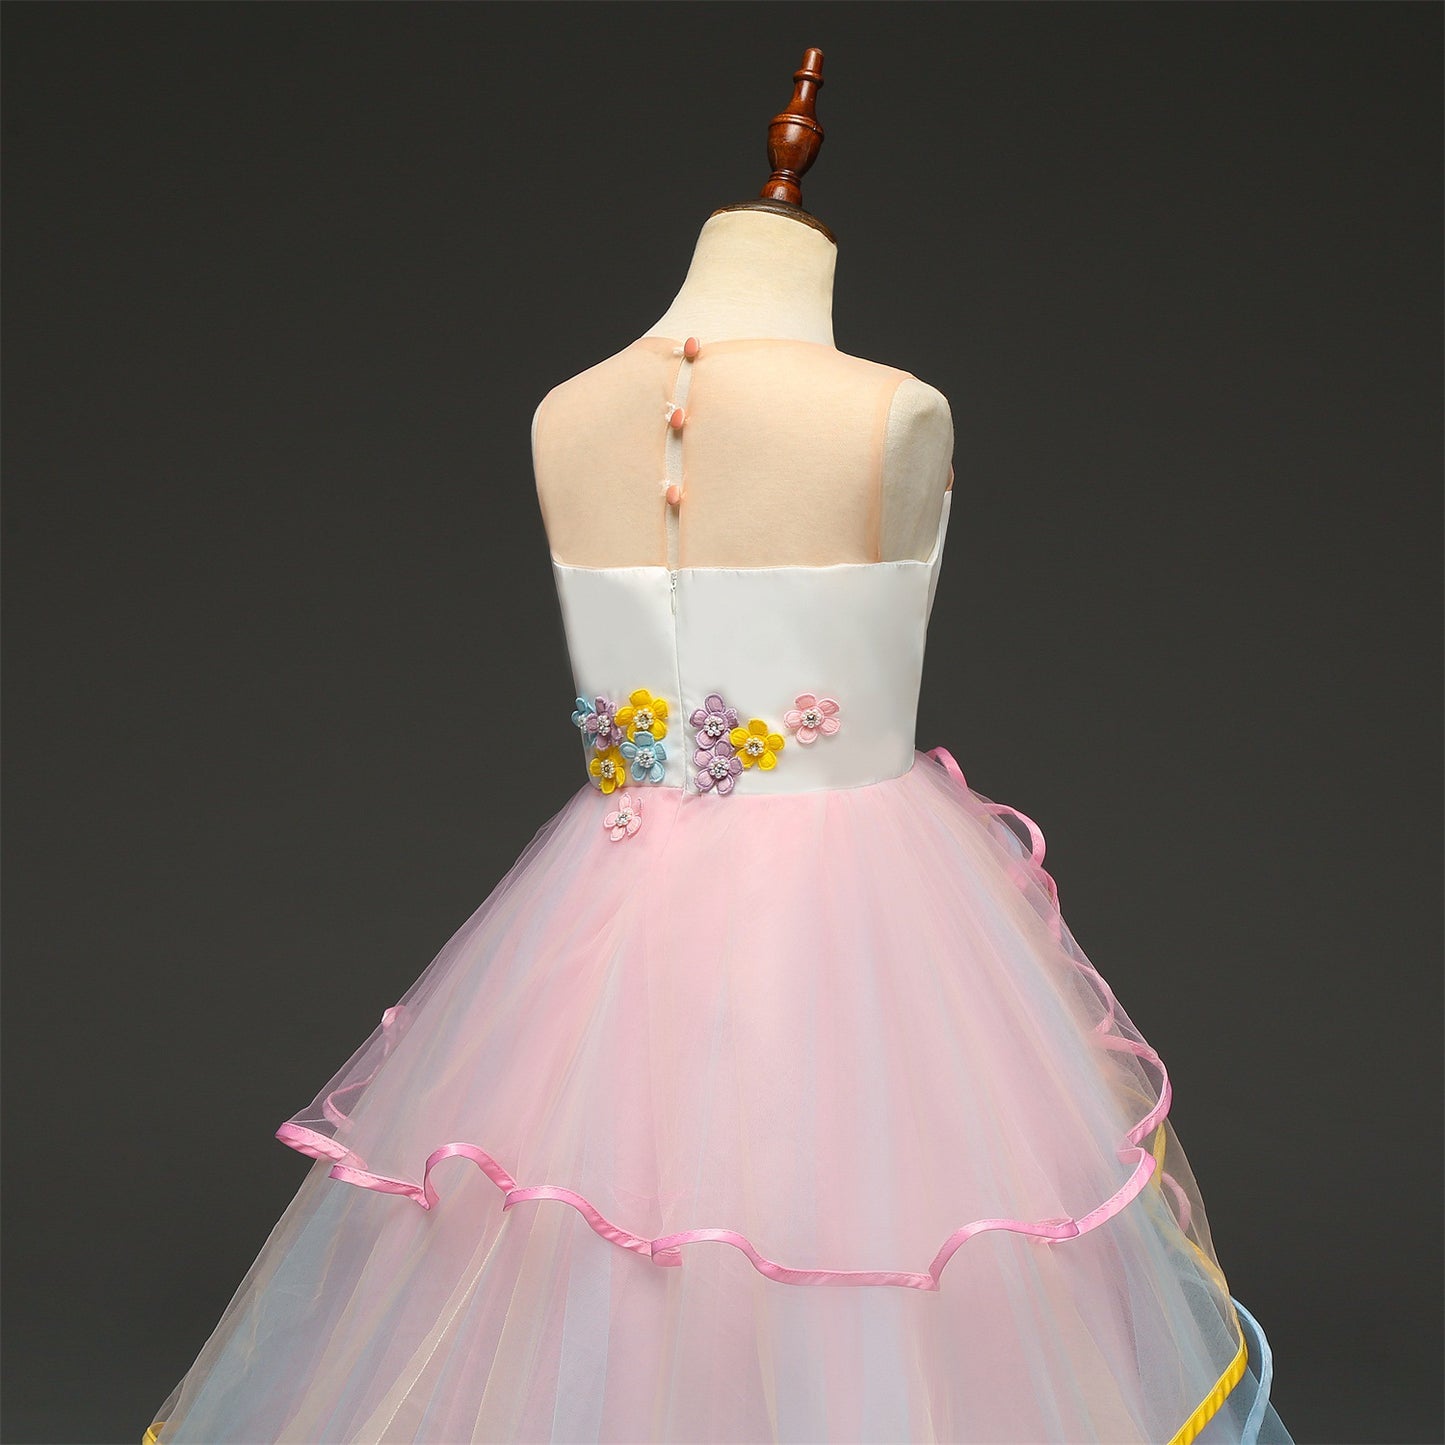 Lovely Unicorn Princess Ball Gown Dresses